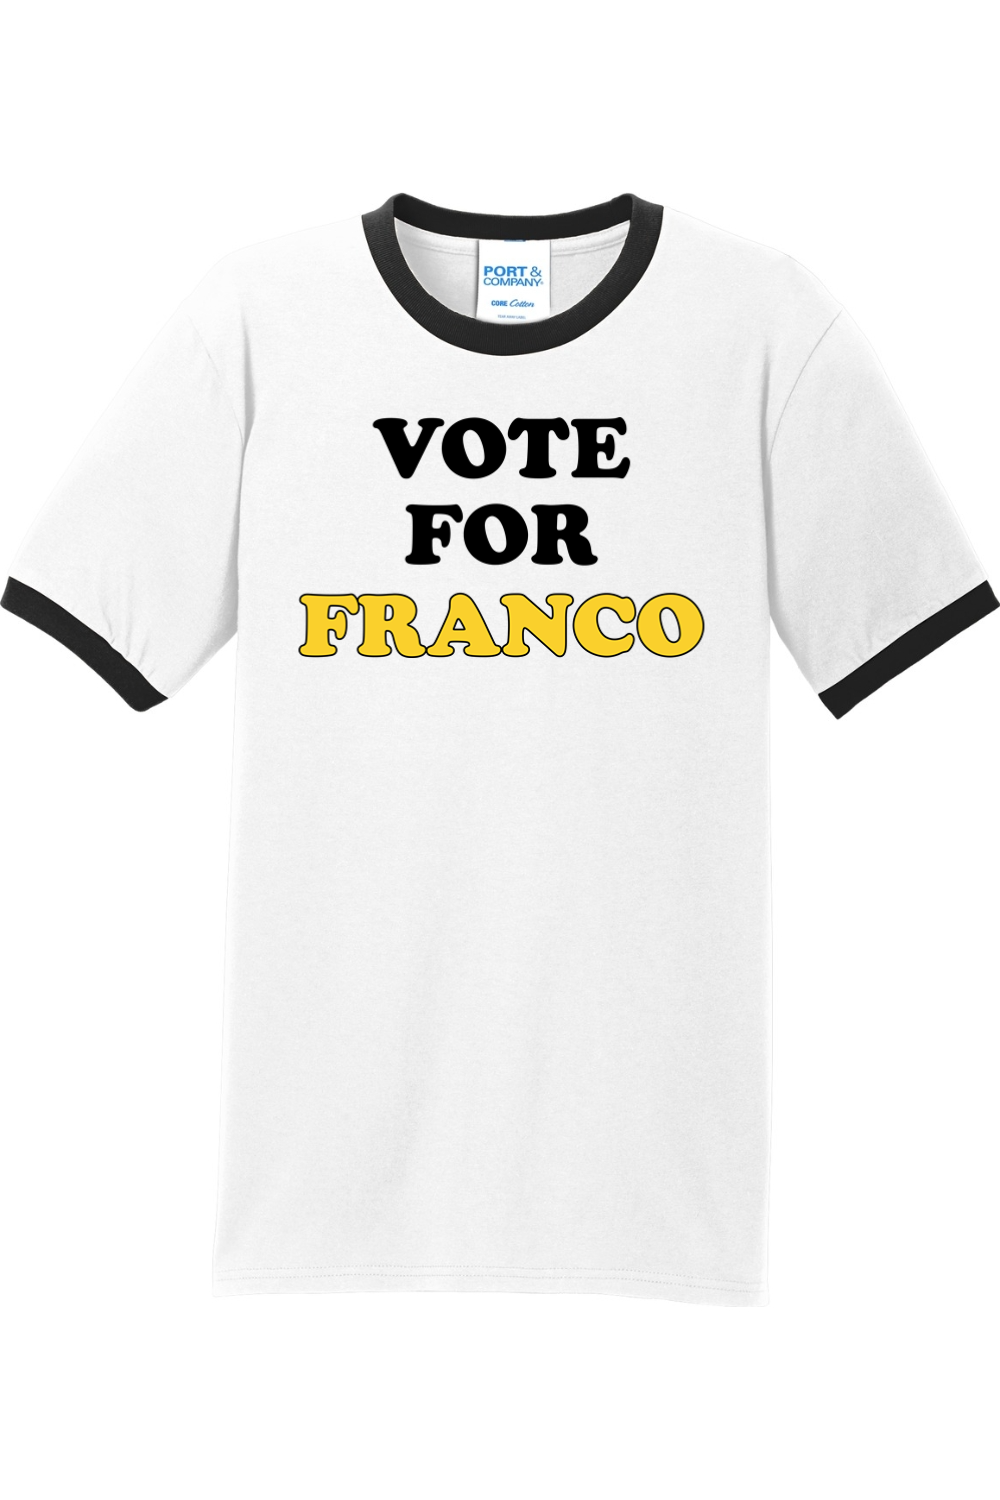 Vote for Franco - Ringer Tee - Yinzylvania